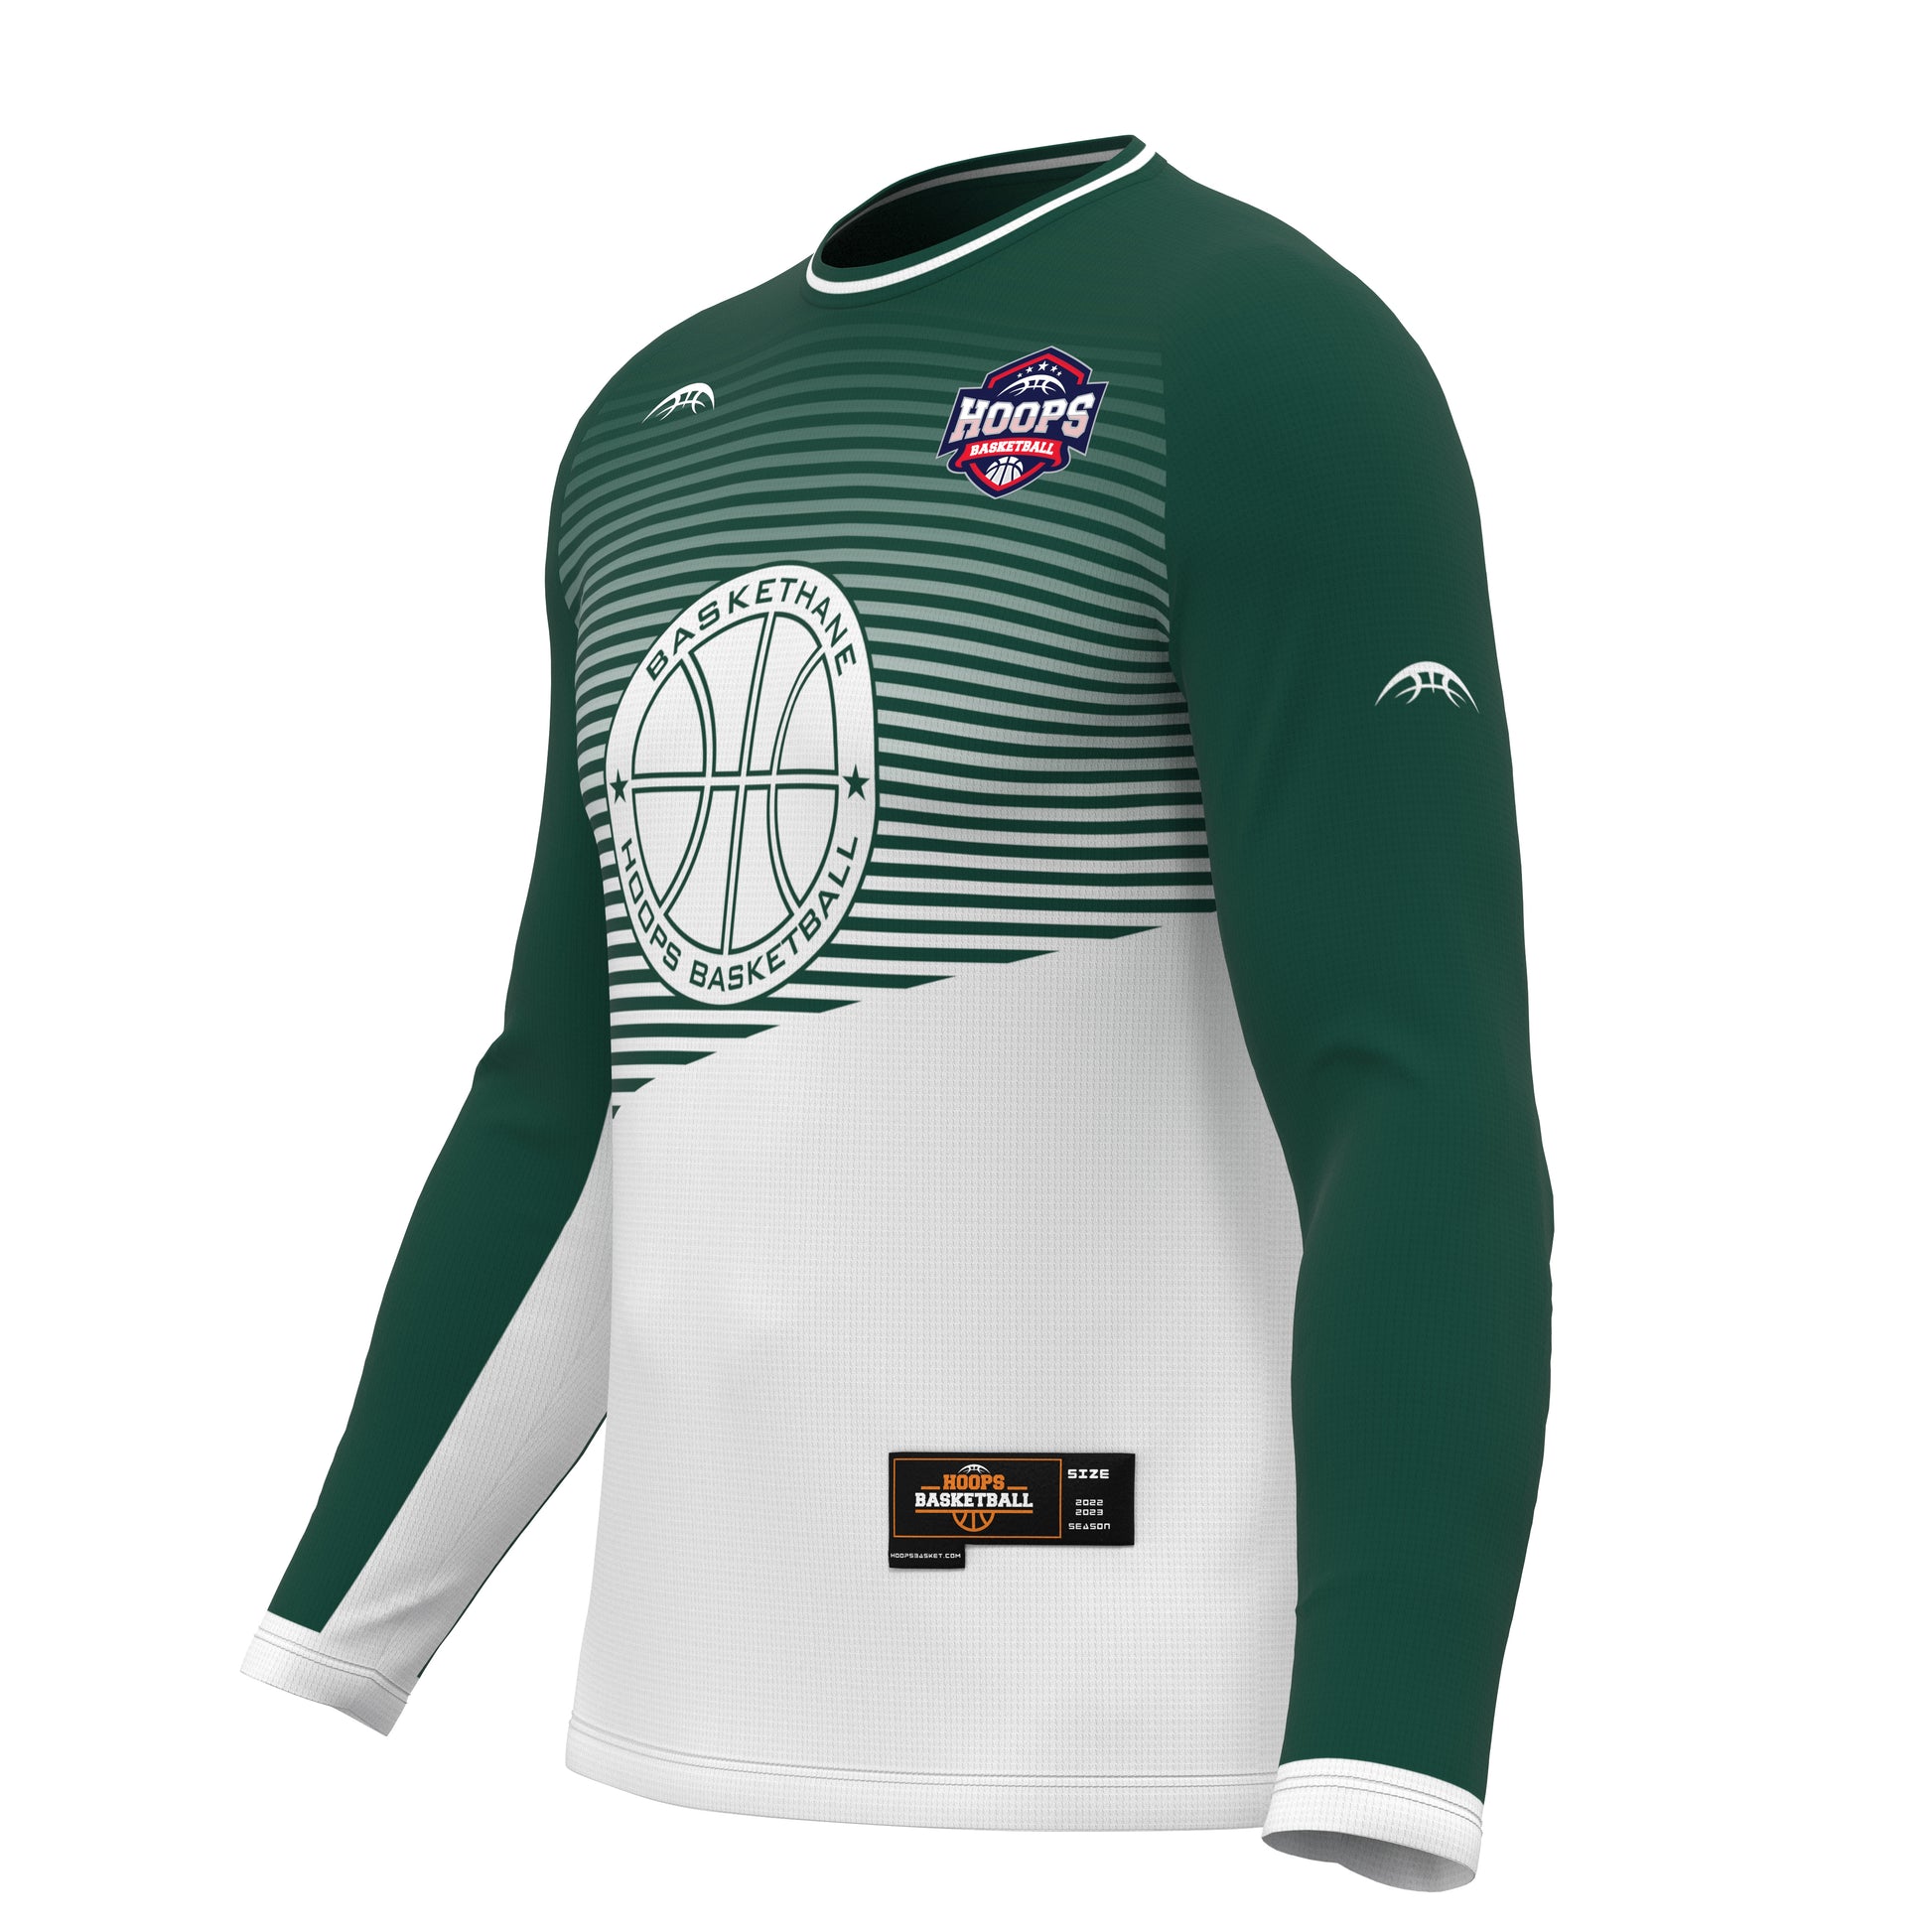 Basketball T-Shirt Designs  Custom Basketball T-Shirts